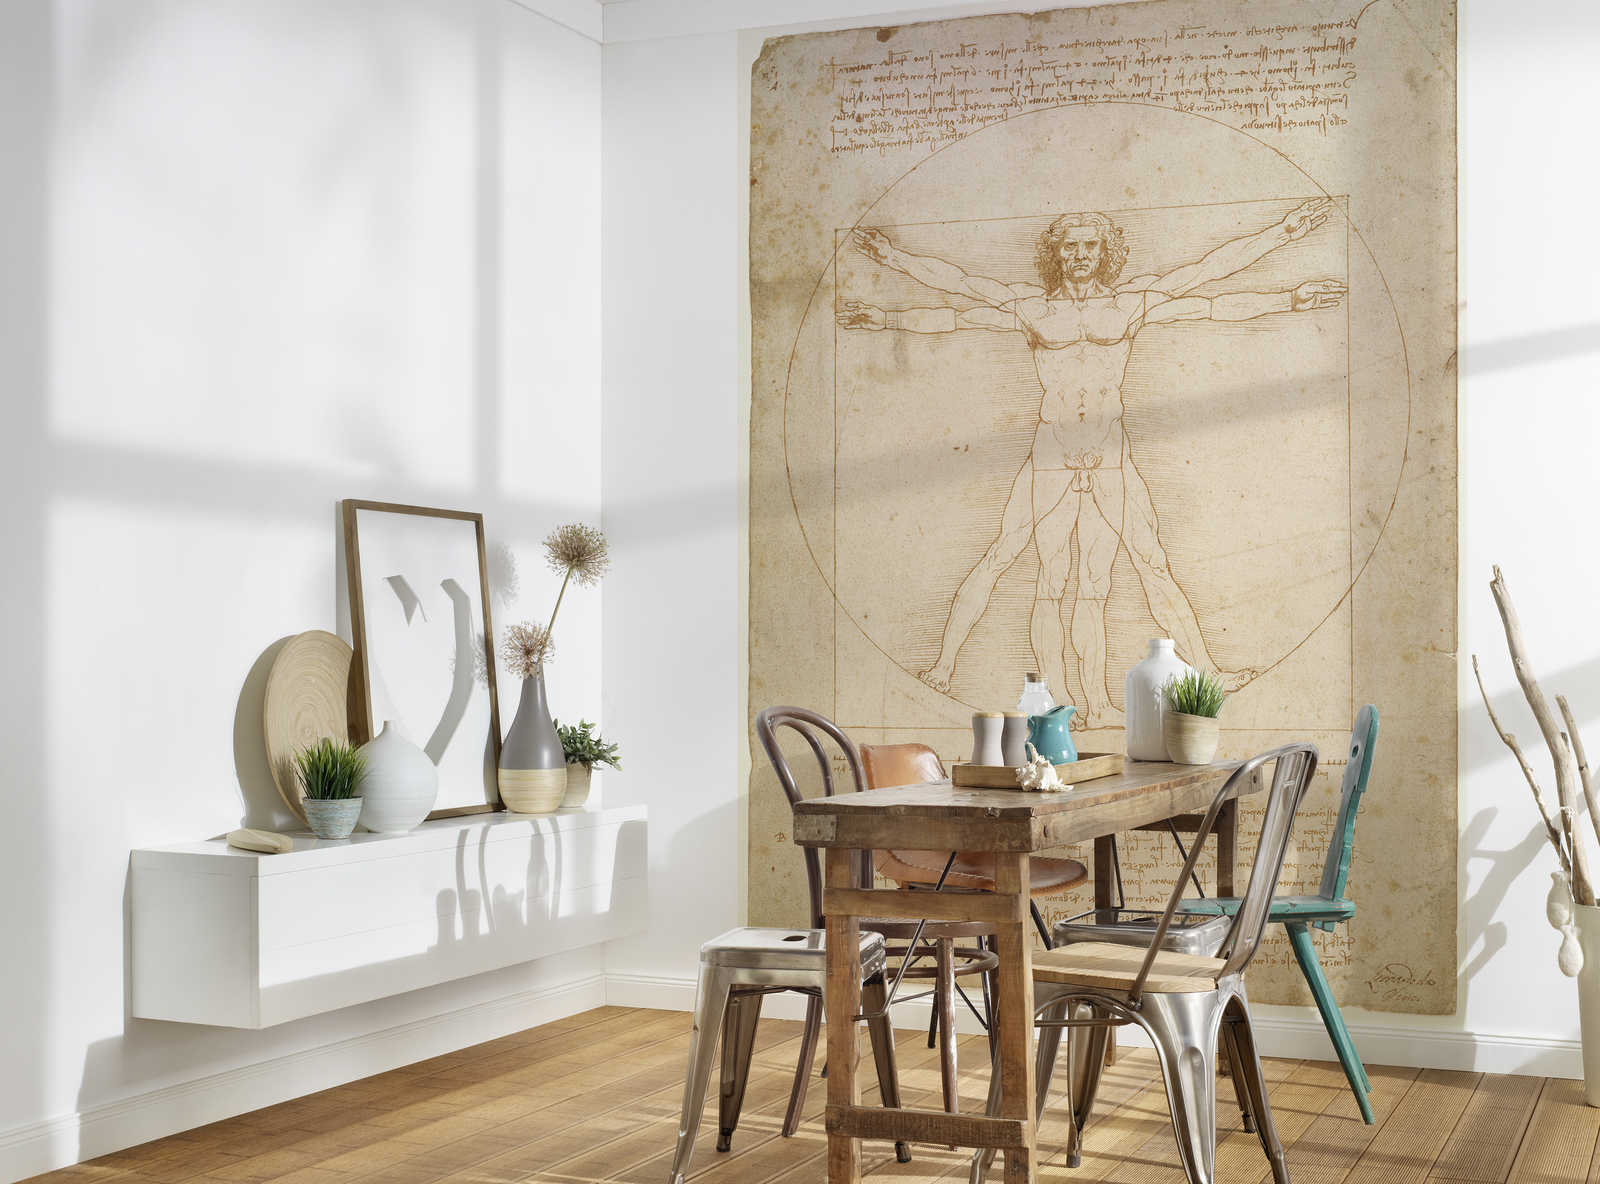             De Vitruviaanse Man" muurschildering van Leonardo da Vinci
        